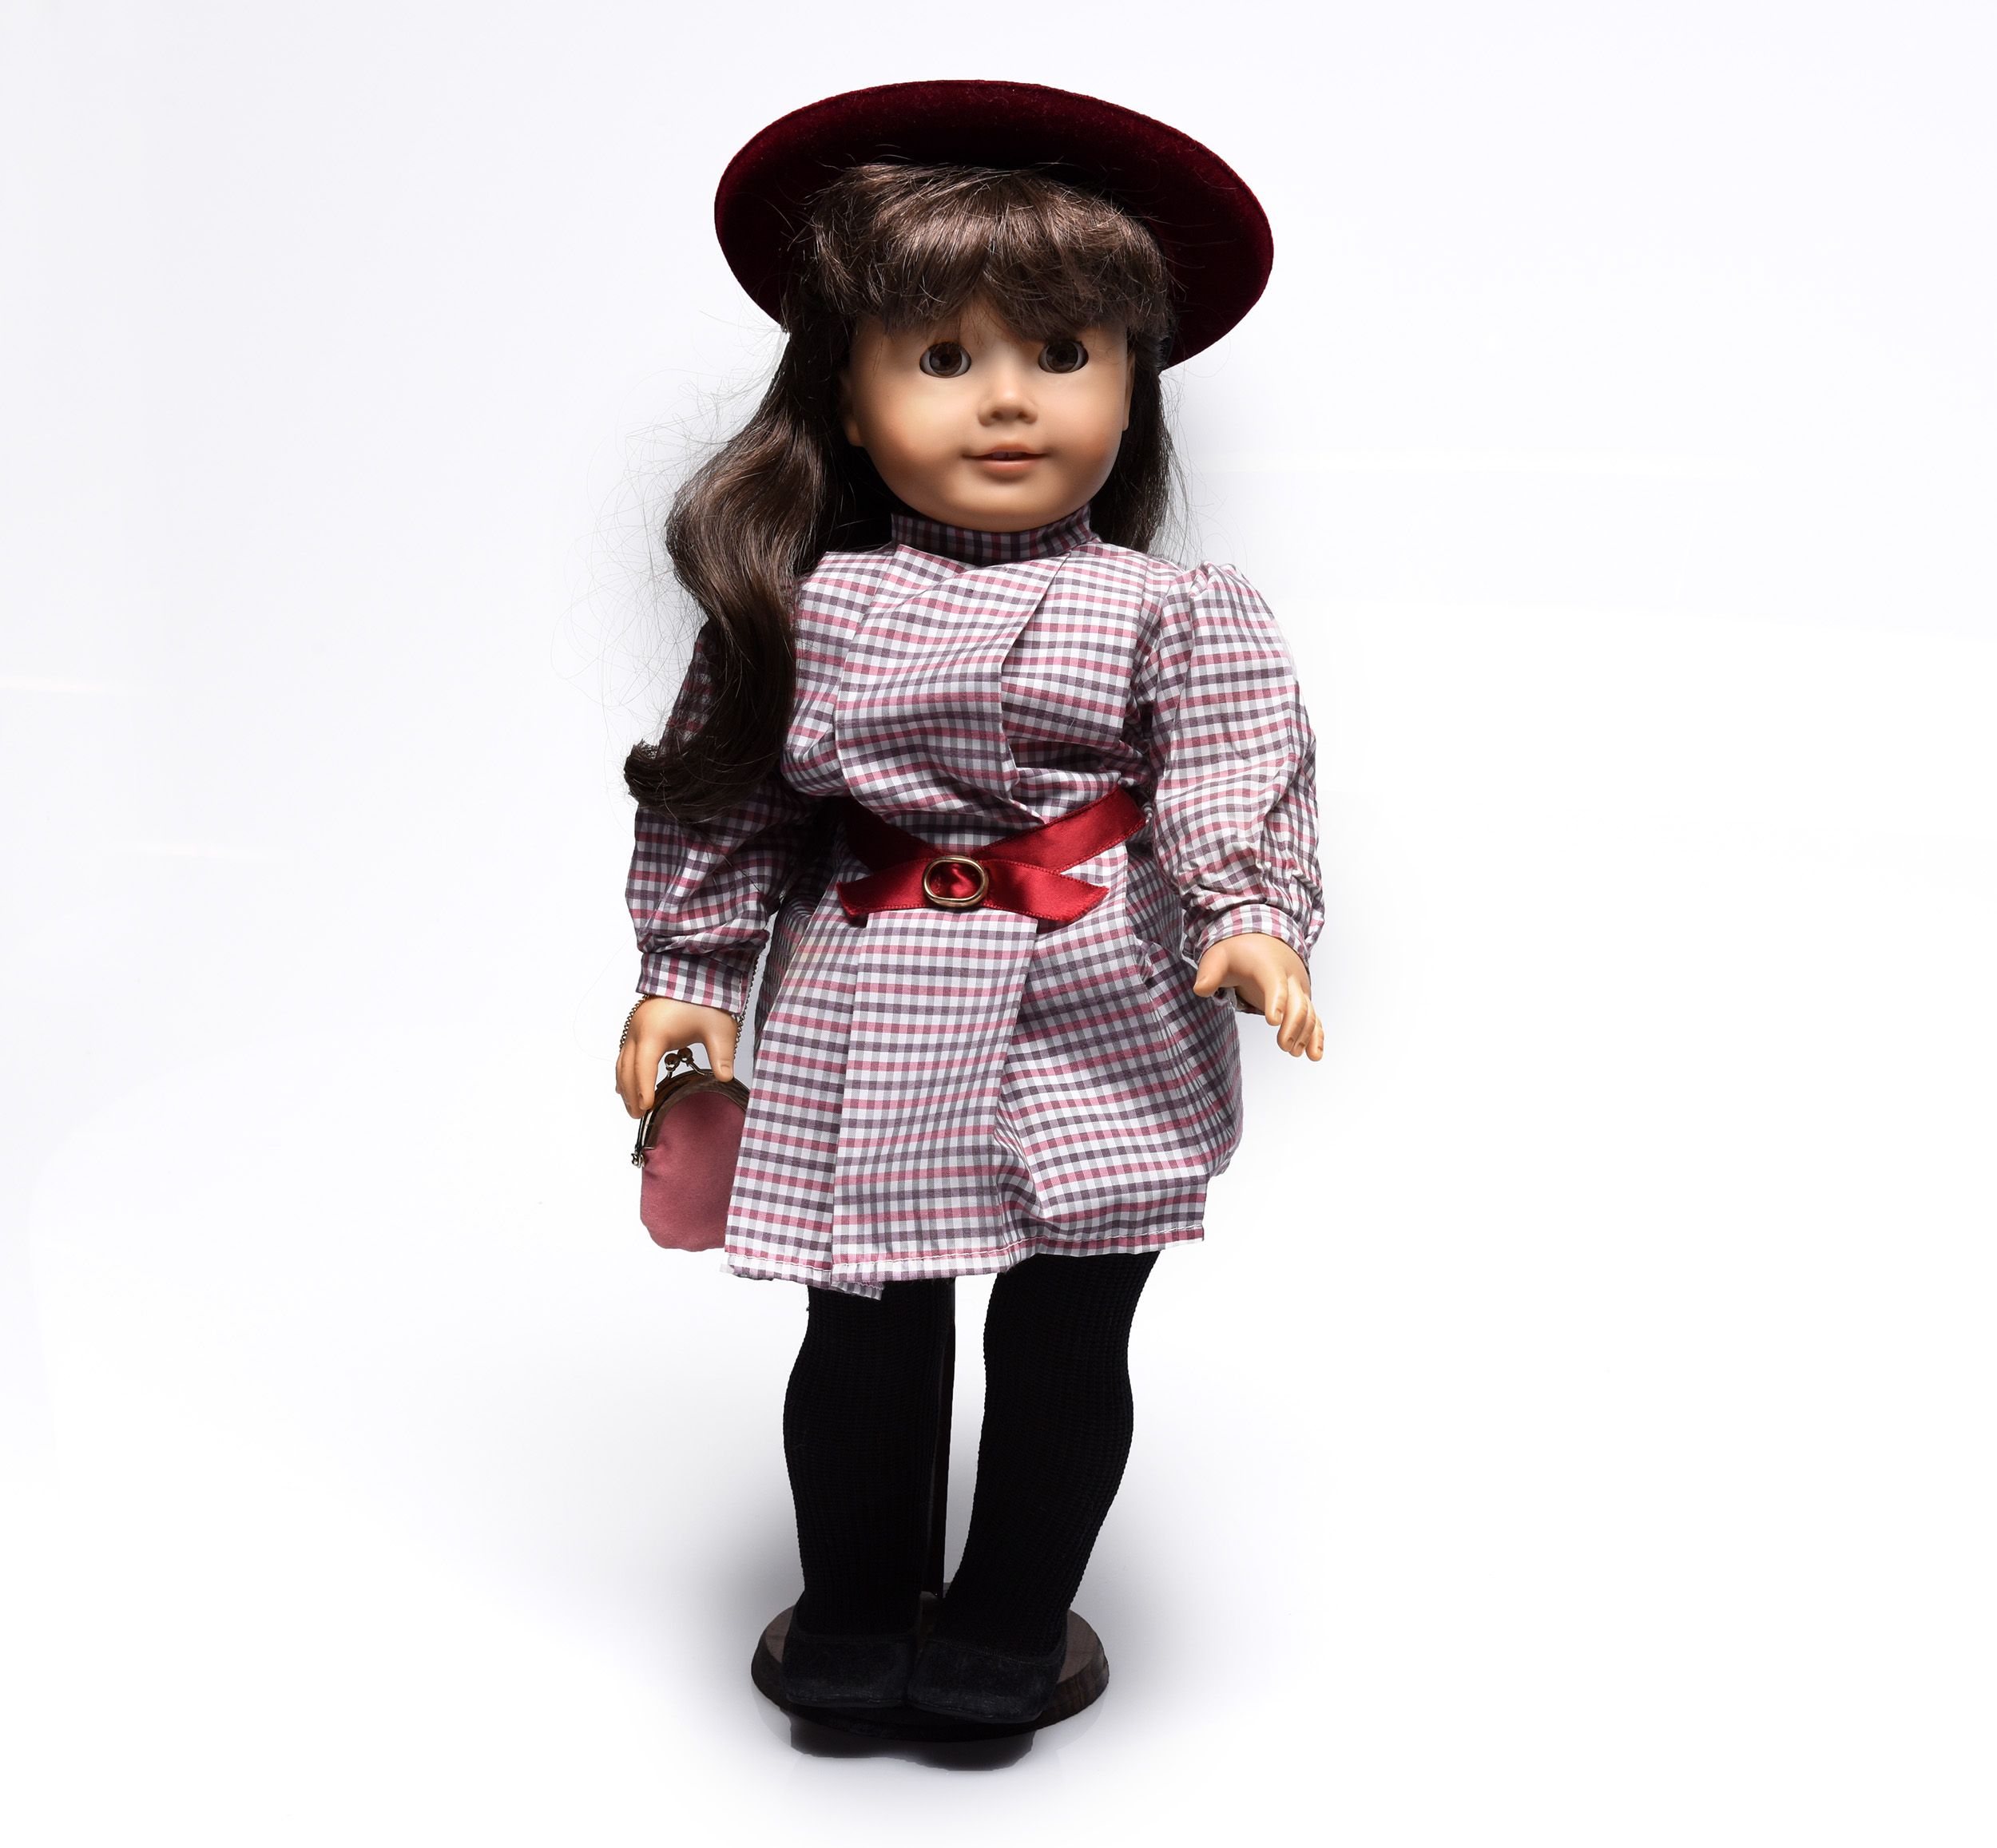 american girl dolls that are worth money